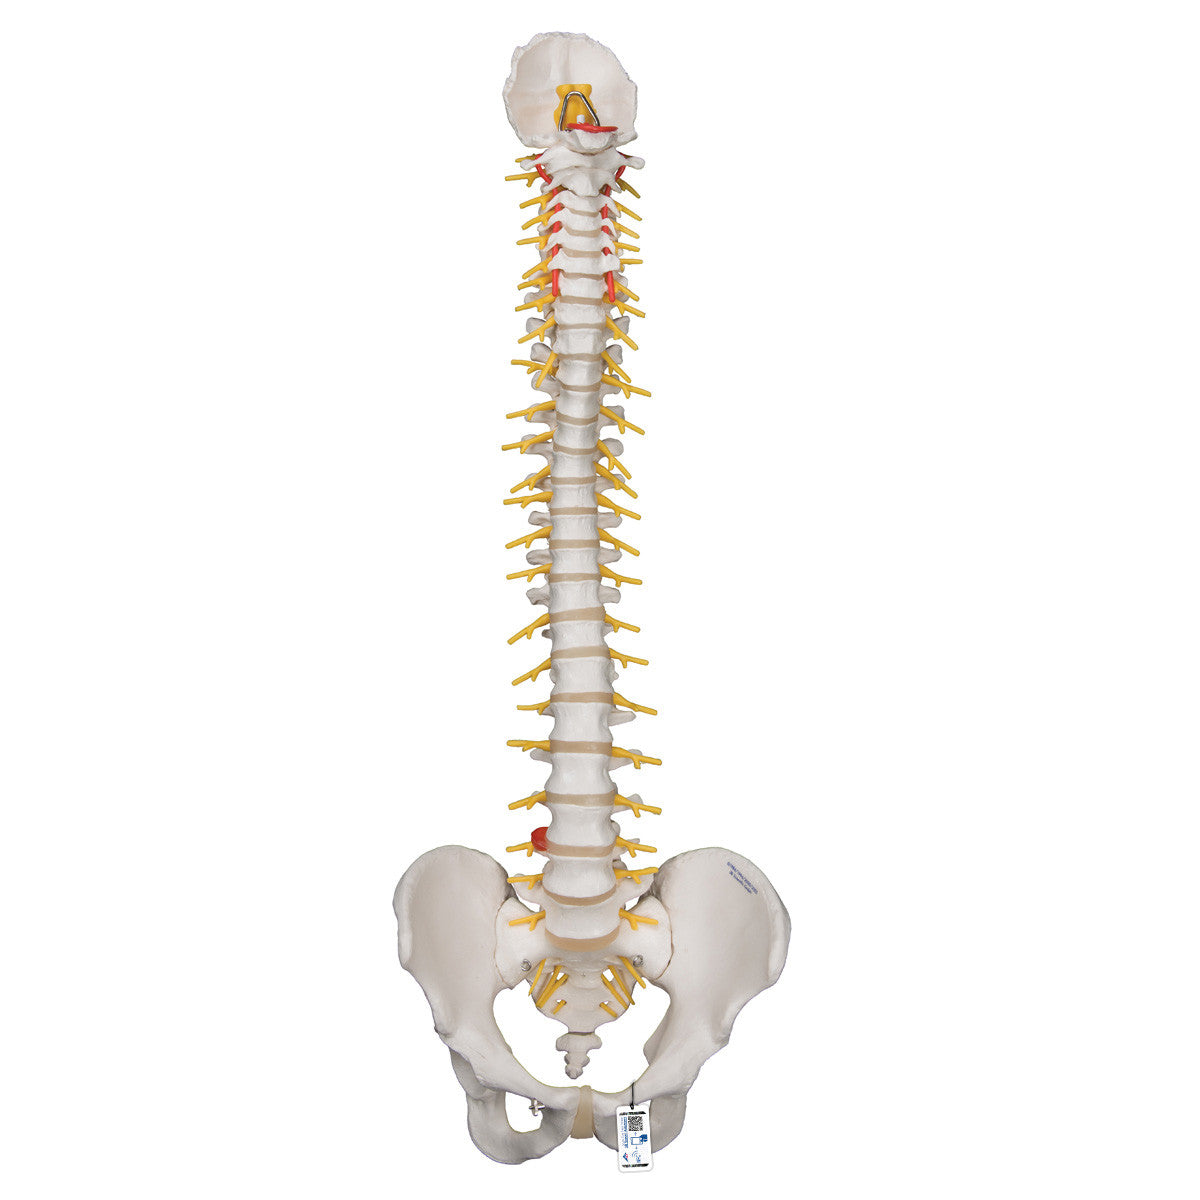 a58-5_01_1200_1200_deluxe-flexible-human-spine-model-3b-smart-anatomy__32885.1589753189.1280.1280.jpg